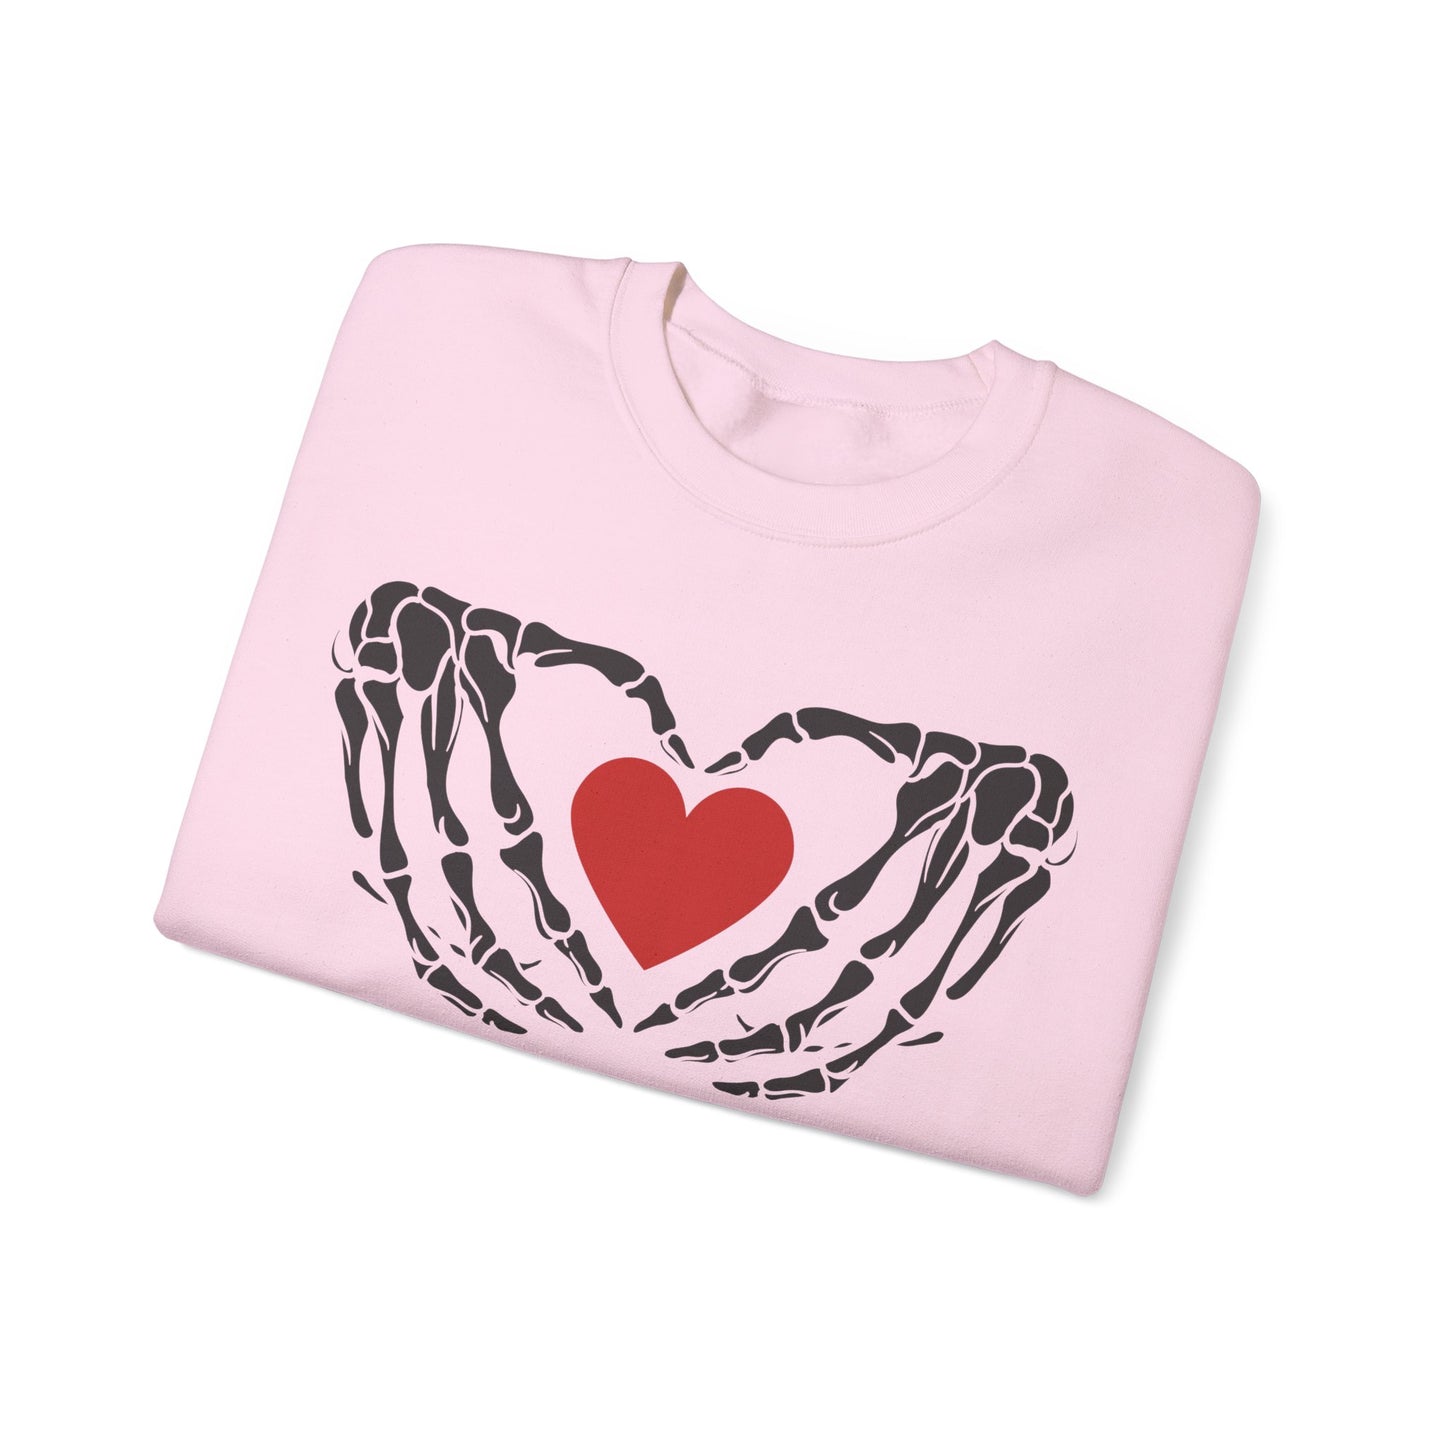 Skeleton Hands Heart valentine shirt